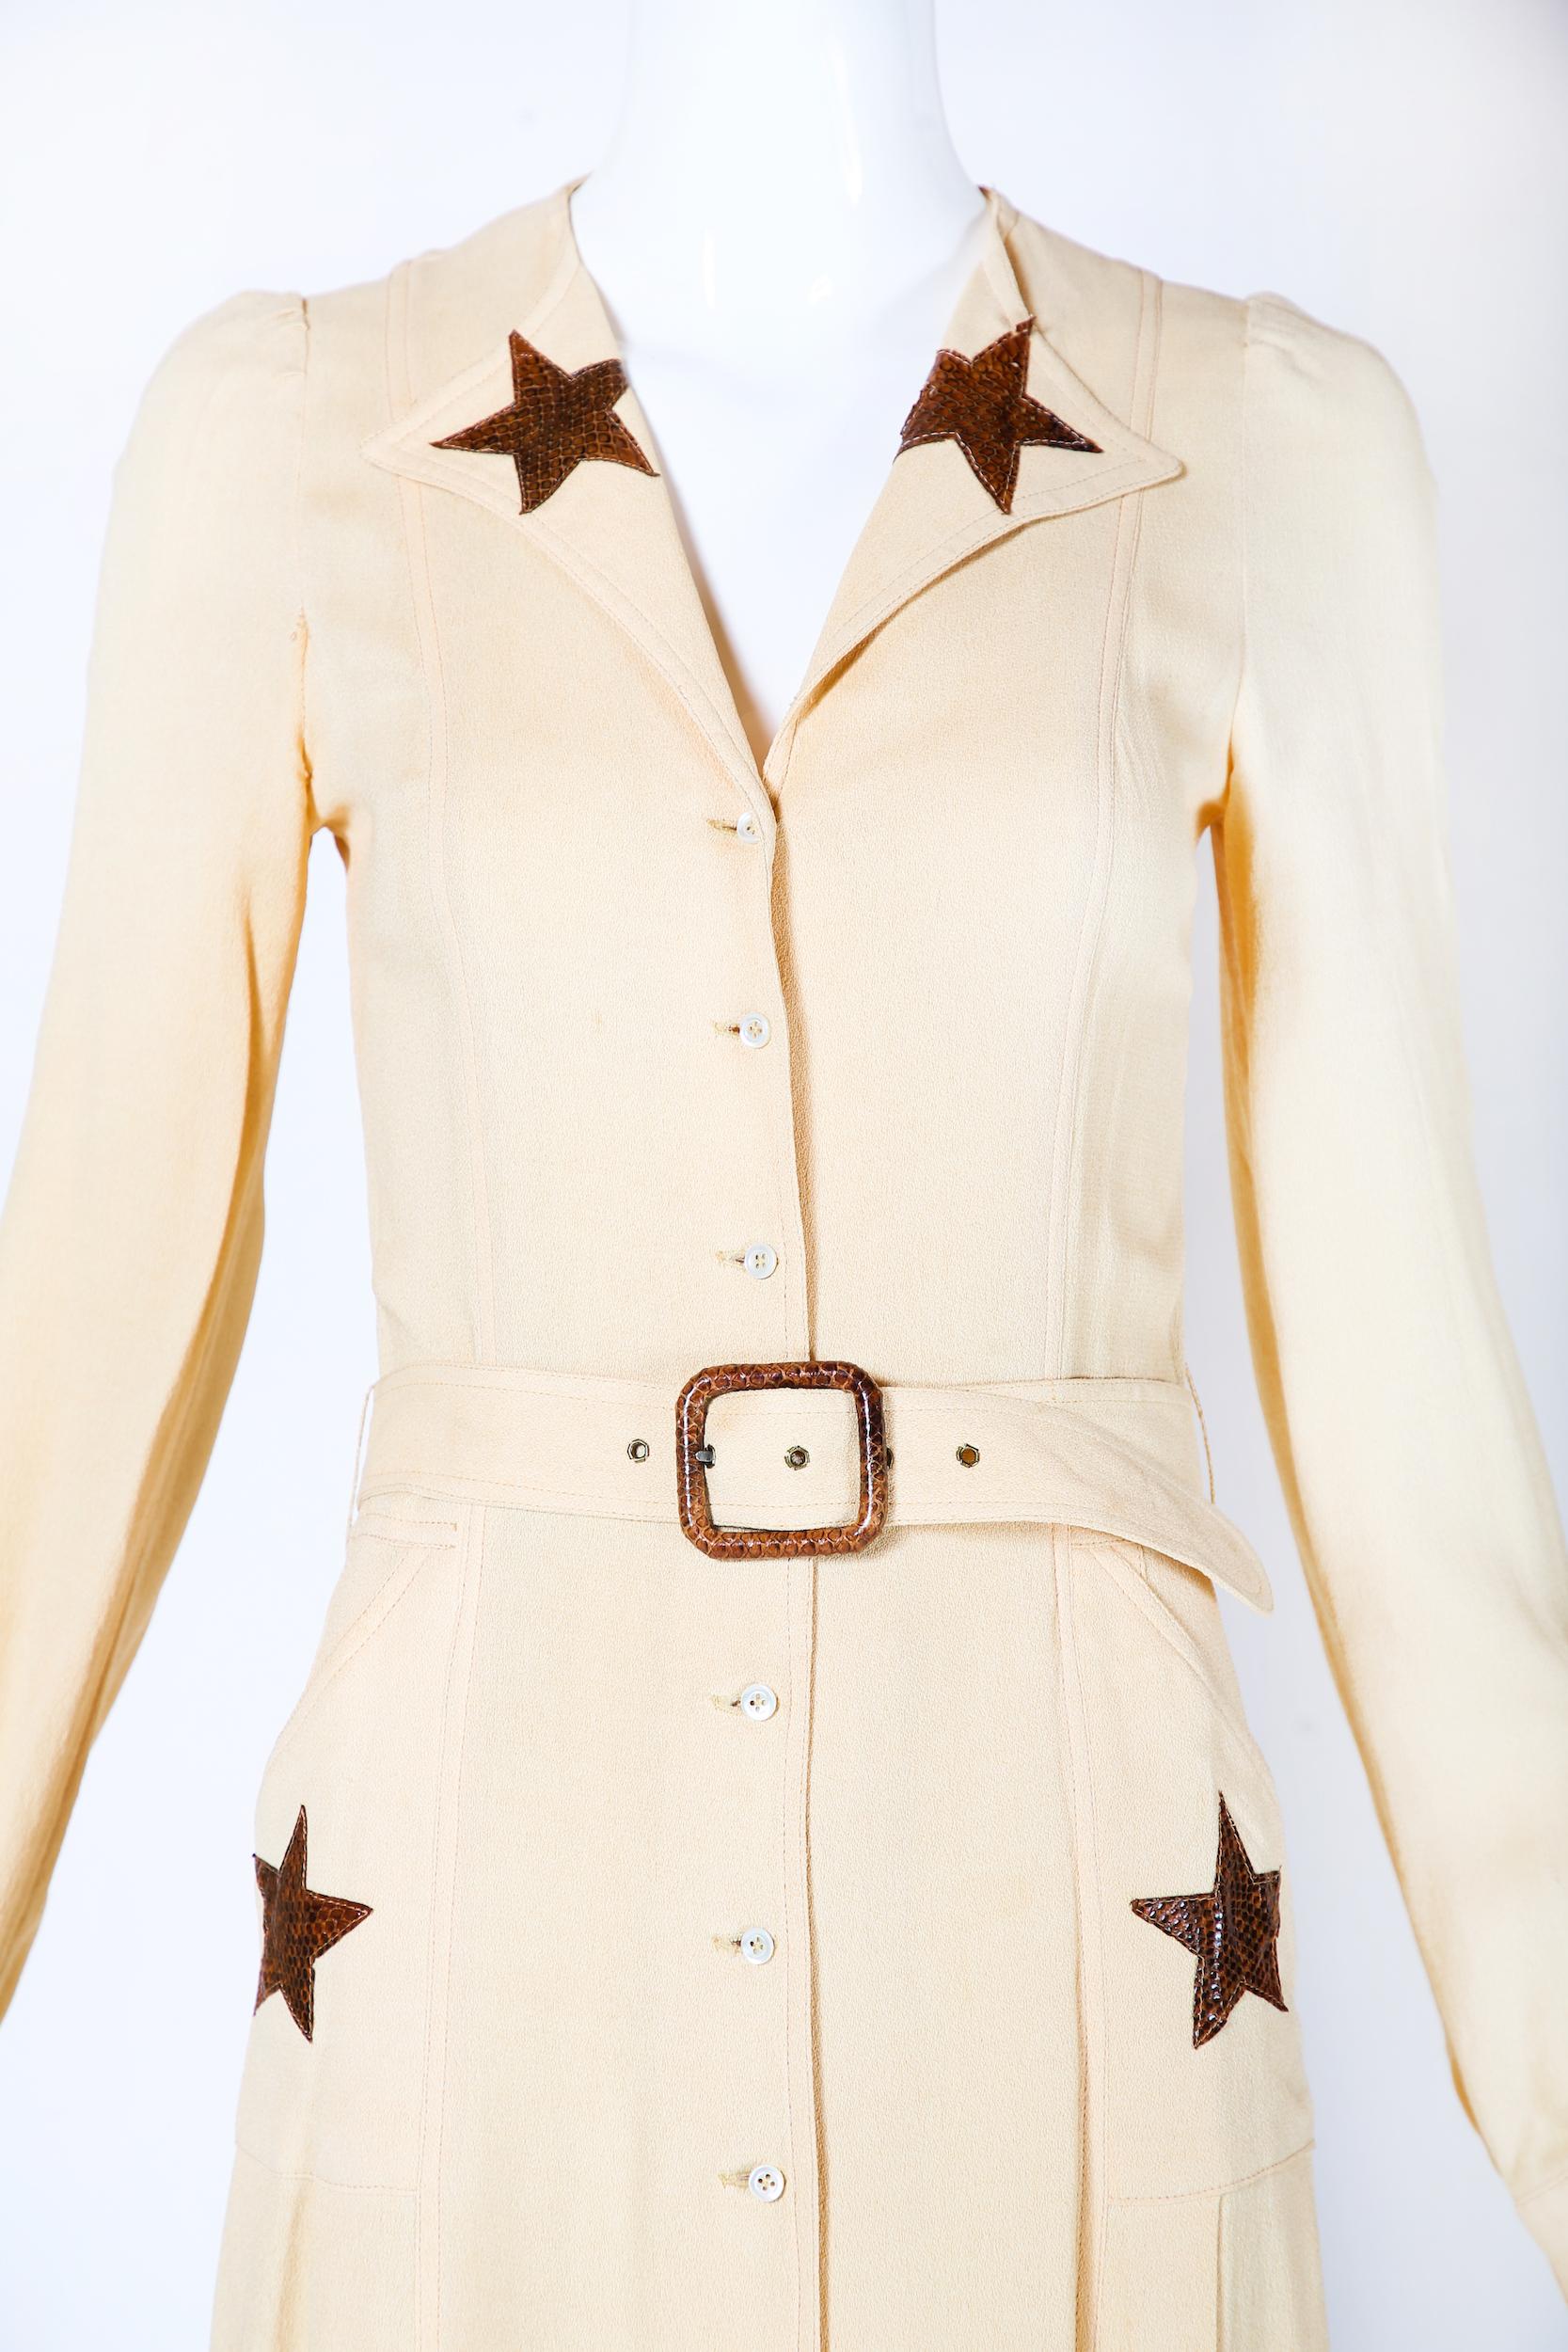 Women's MOG Label Pale Yellow Fitted Dress w/Snakeskin Star Motif ca. 1970